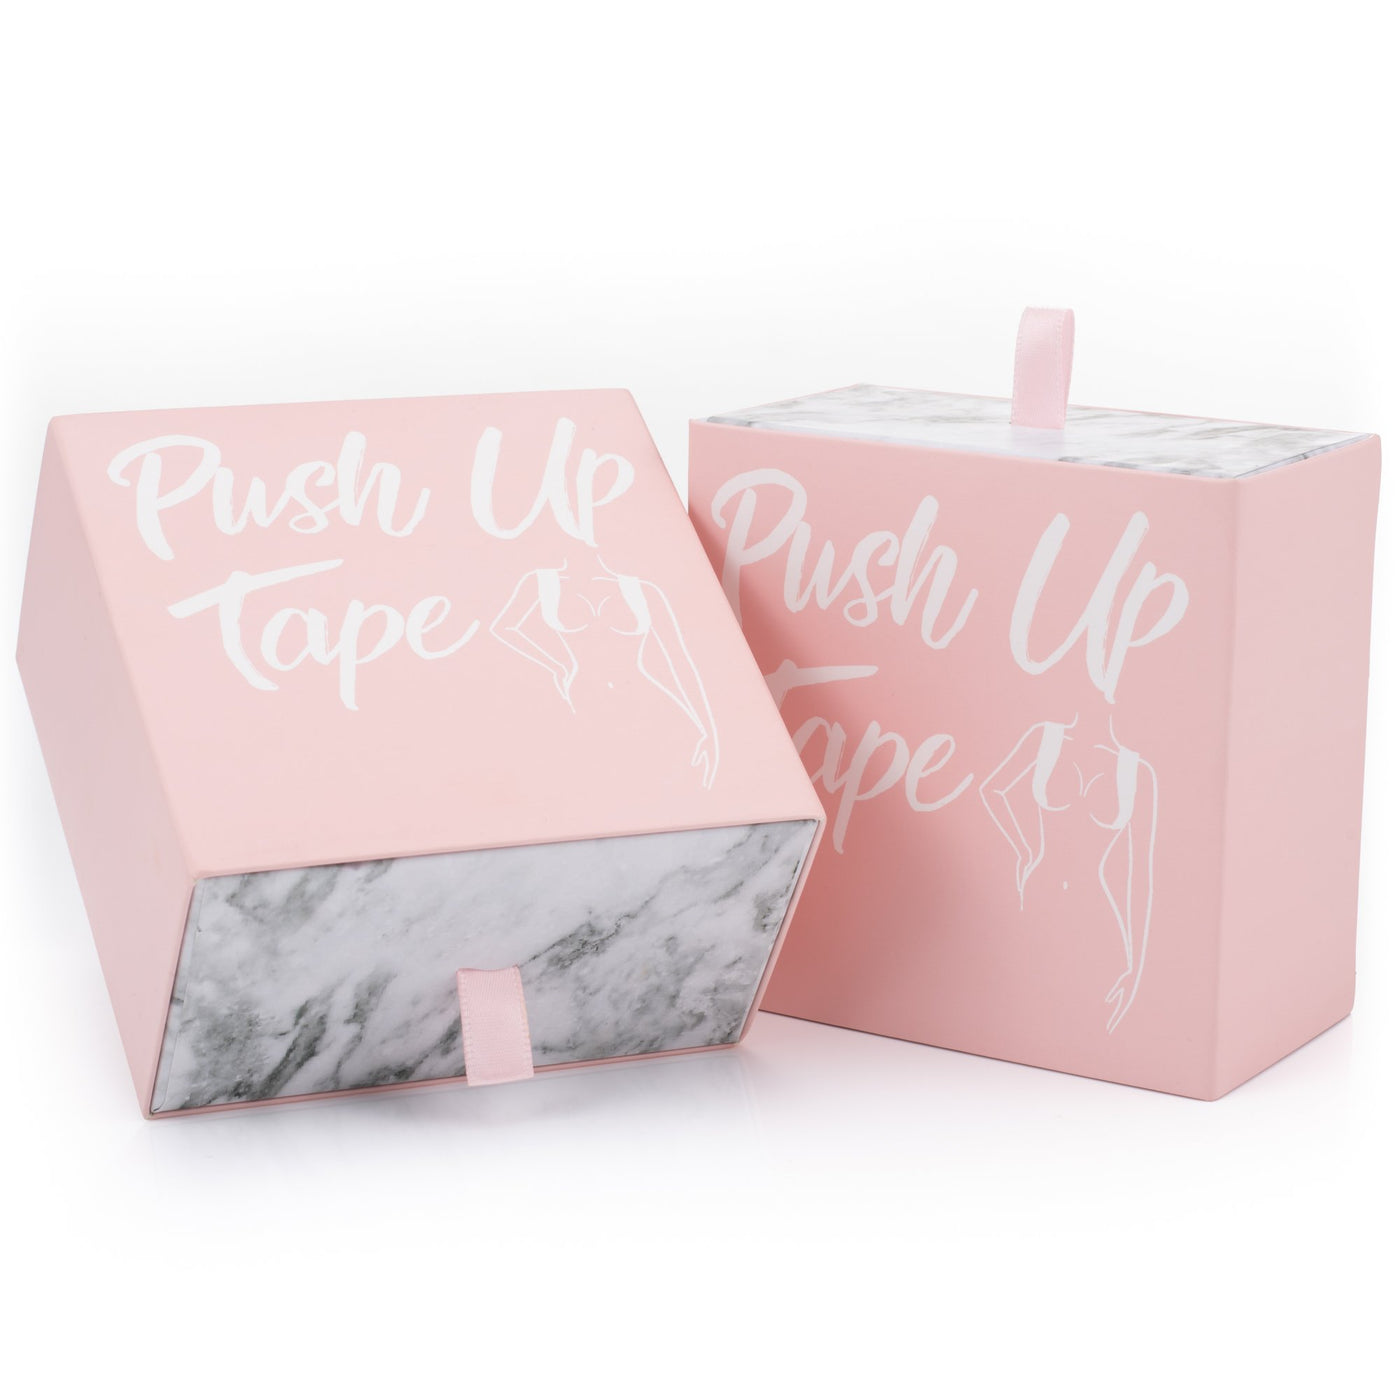 Push Up Tape - Chocolate Fondant